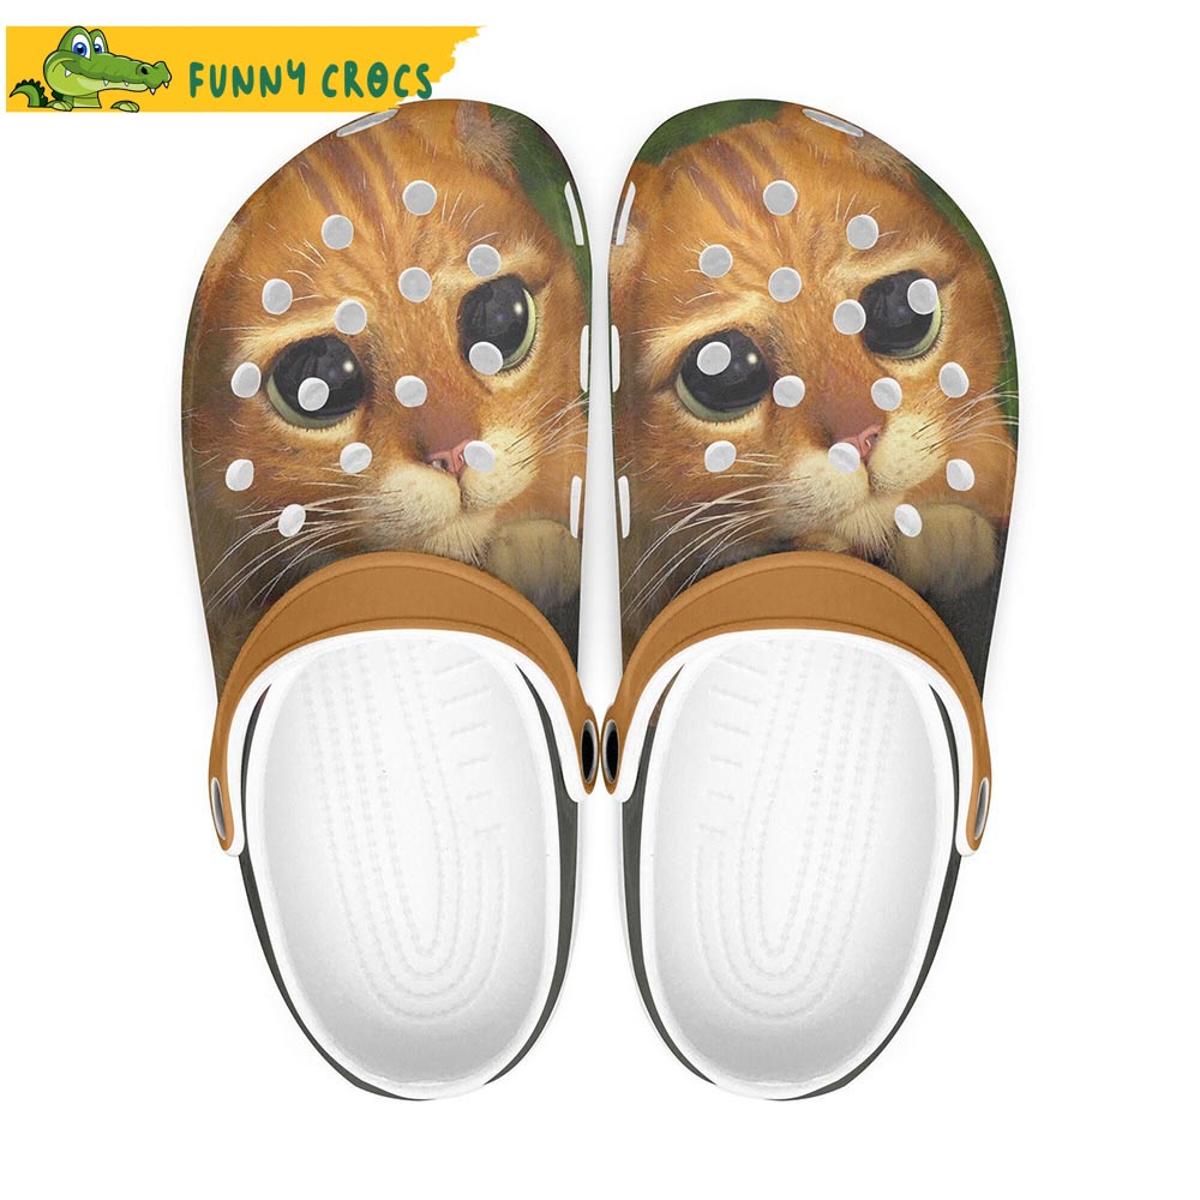 Cat Shrek Crocs Slippers